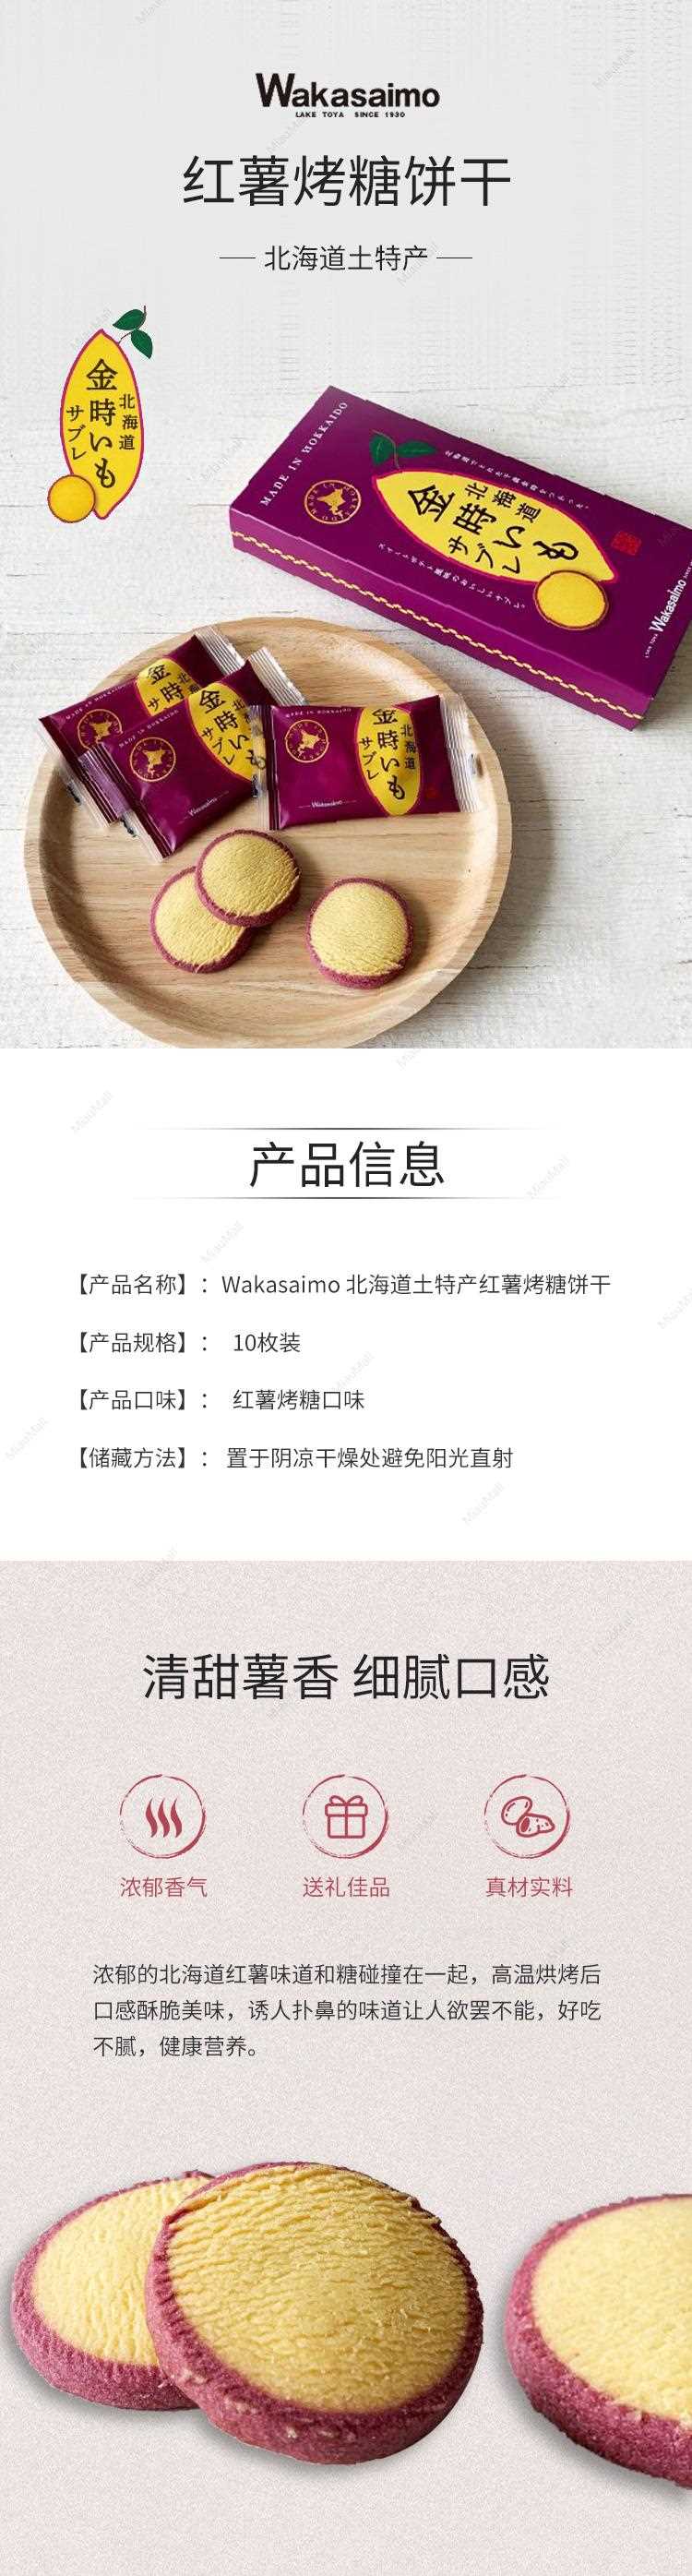 Wakasaimo-北海道土特产红薯烤糖饼干_01.jpg